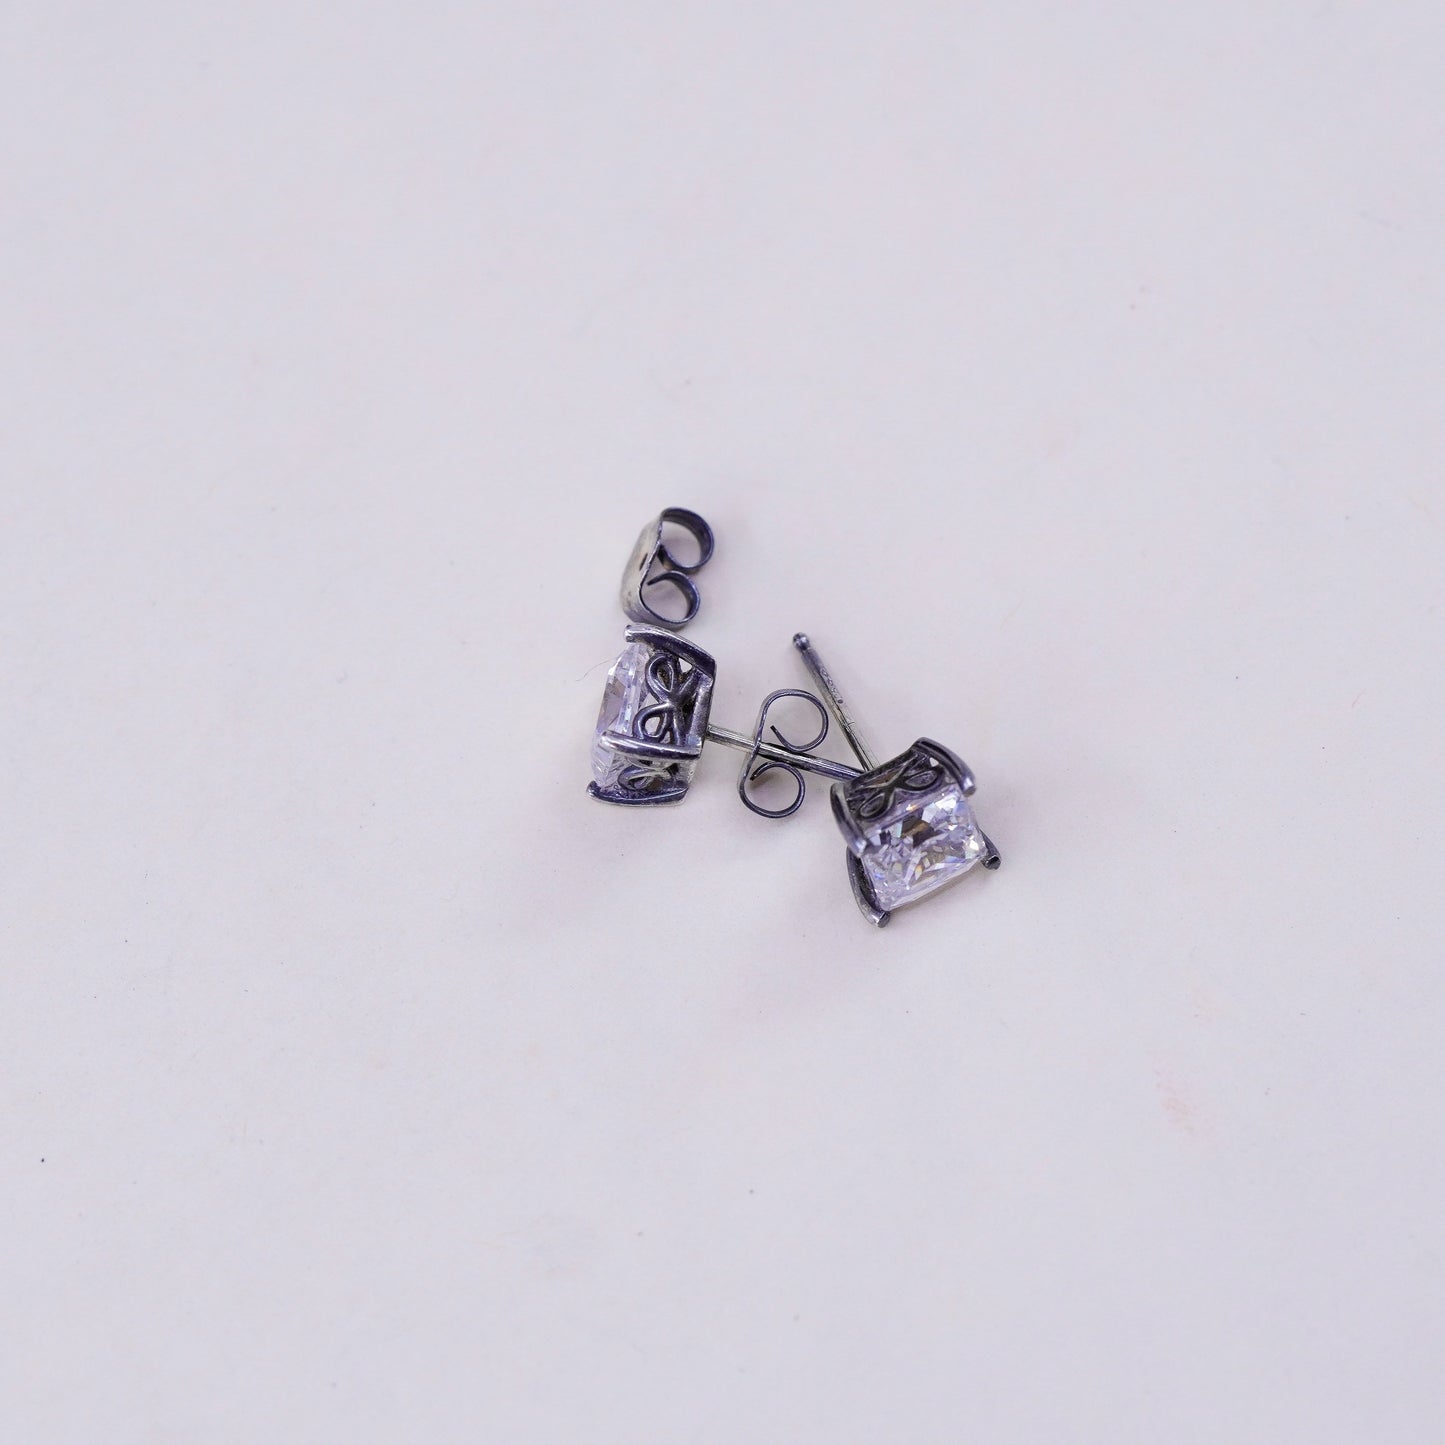 6mm, Vintage sterling silver genuine square cz studs, filigree earrings